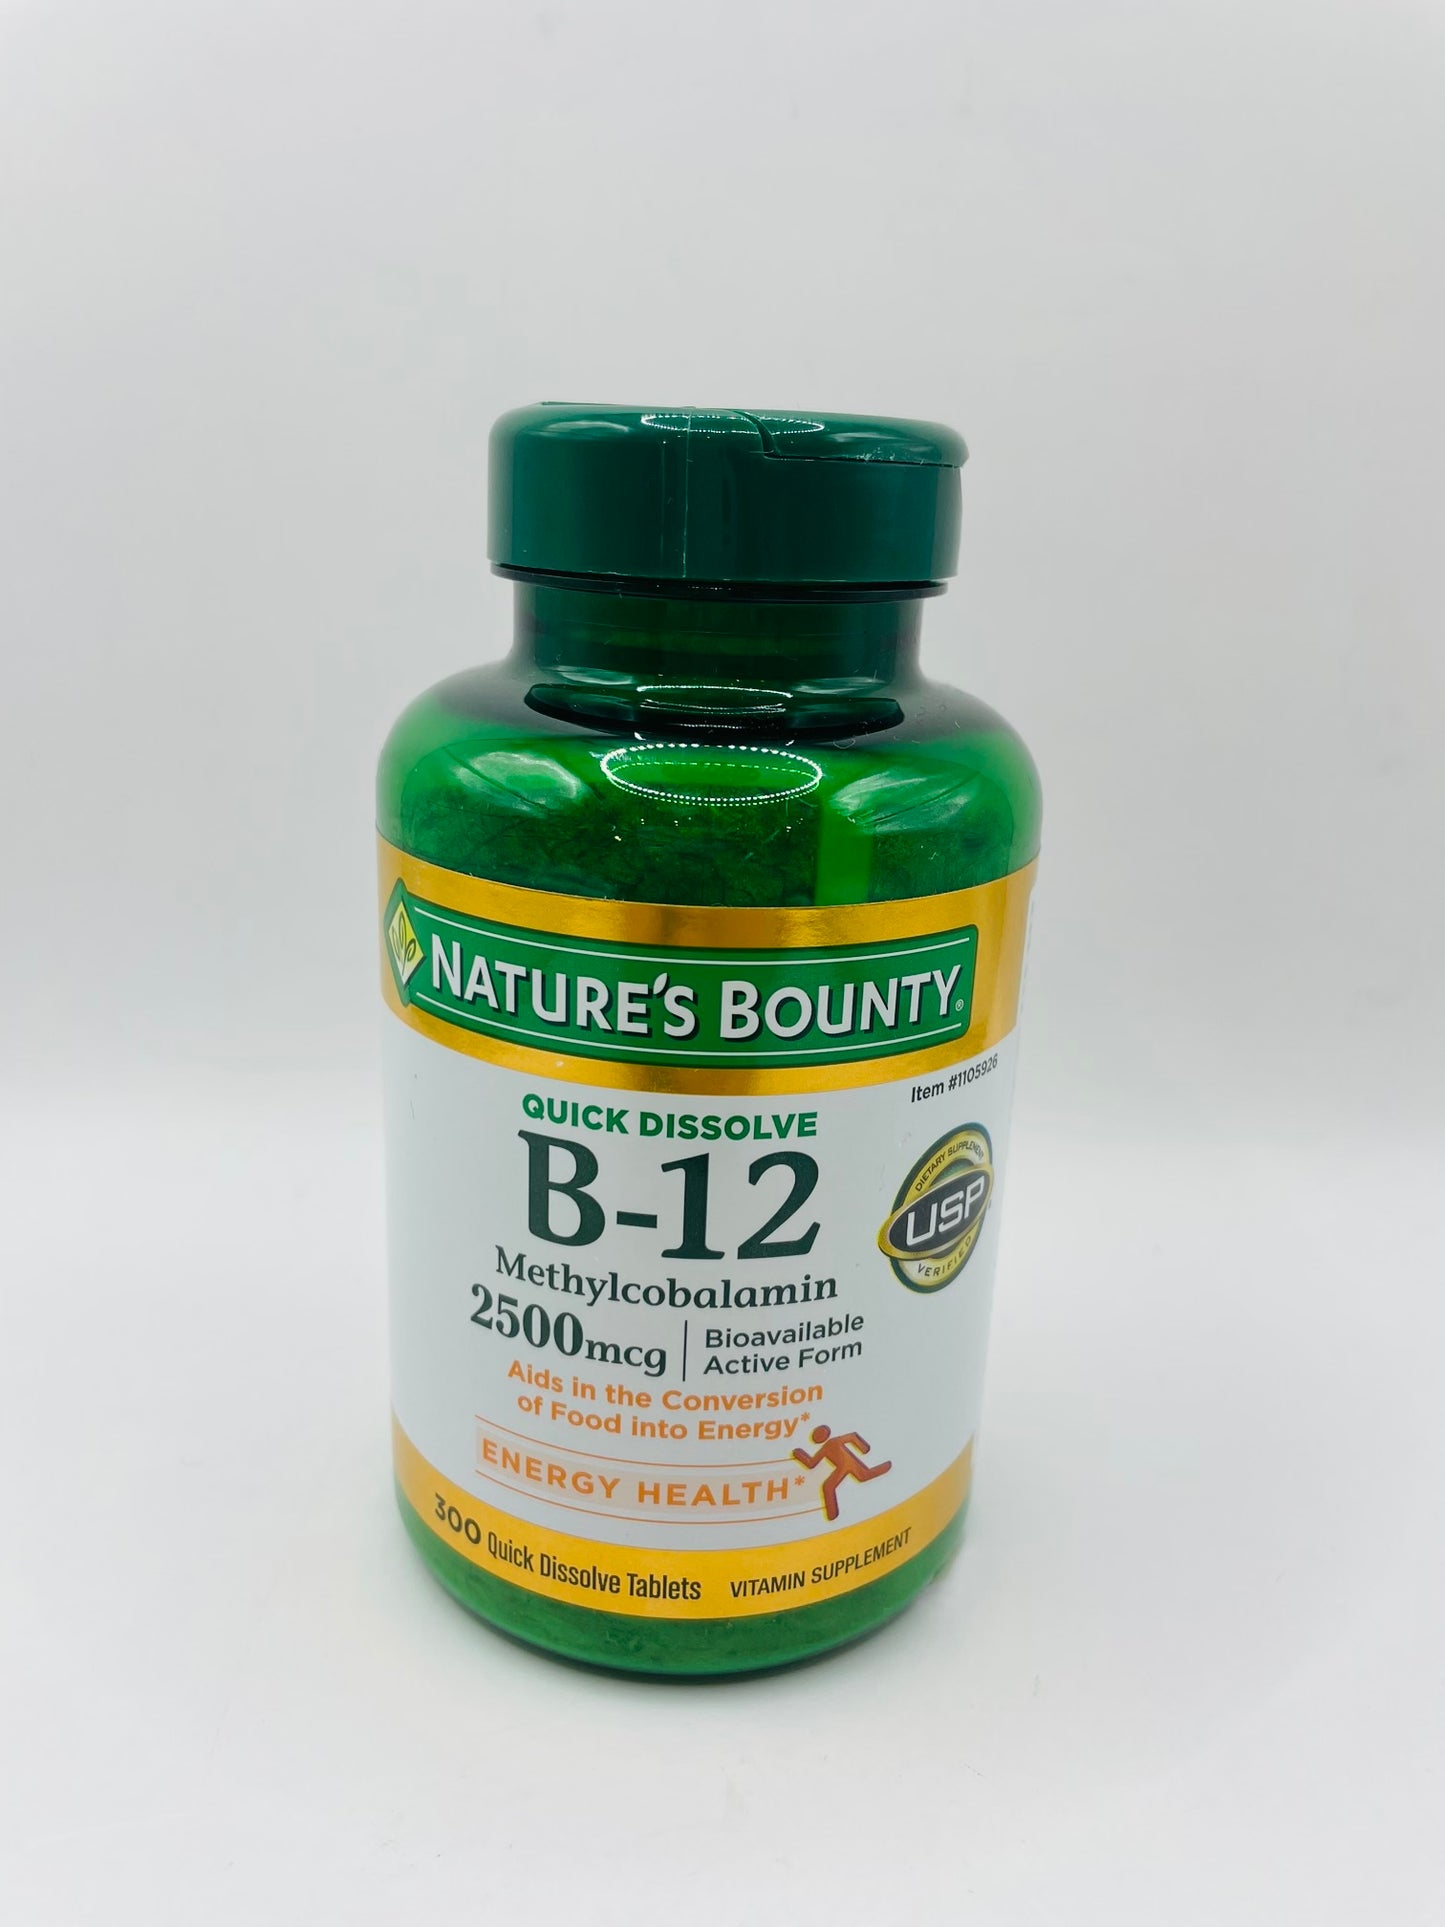 Natures bounty vitamin b-12